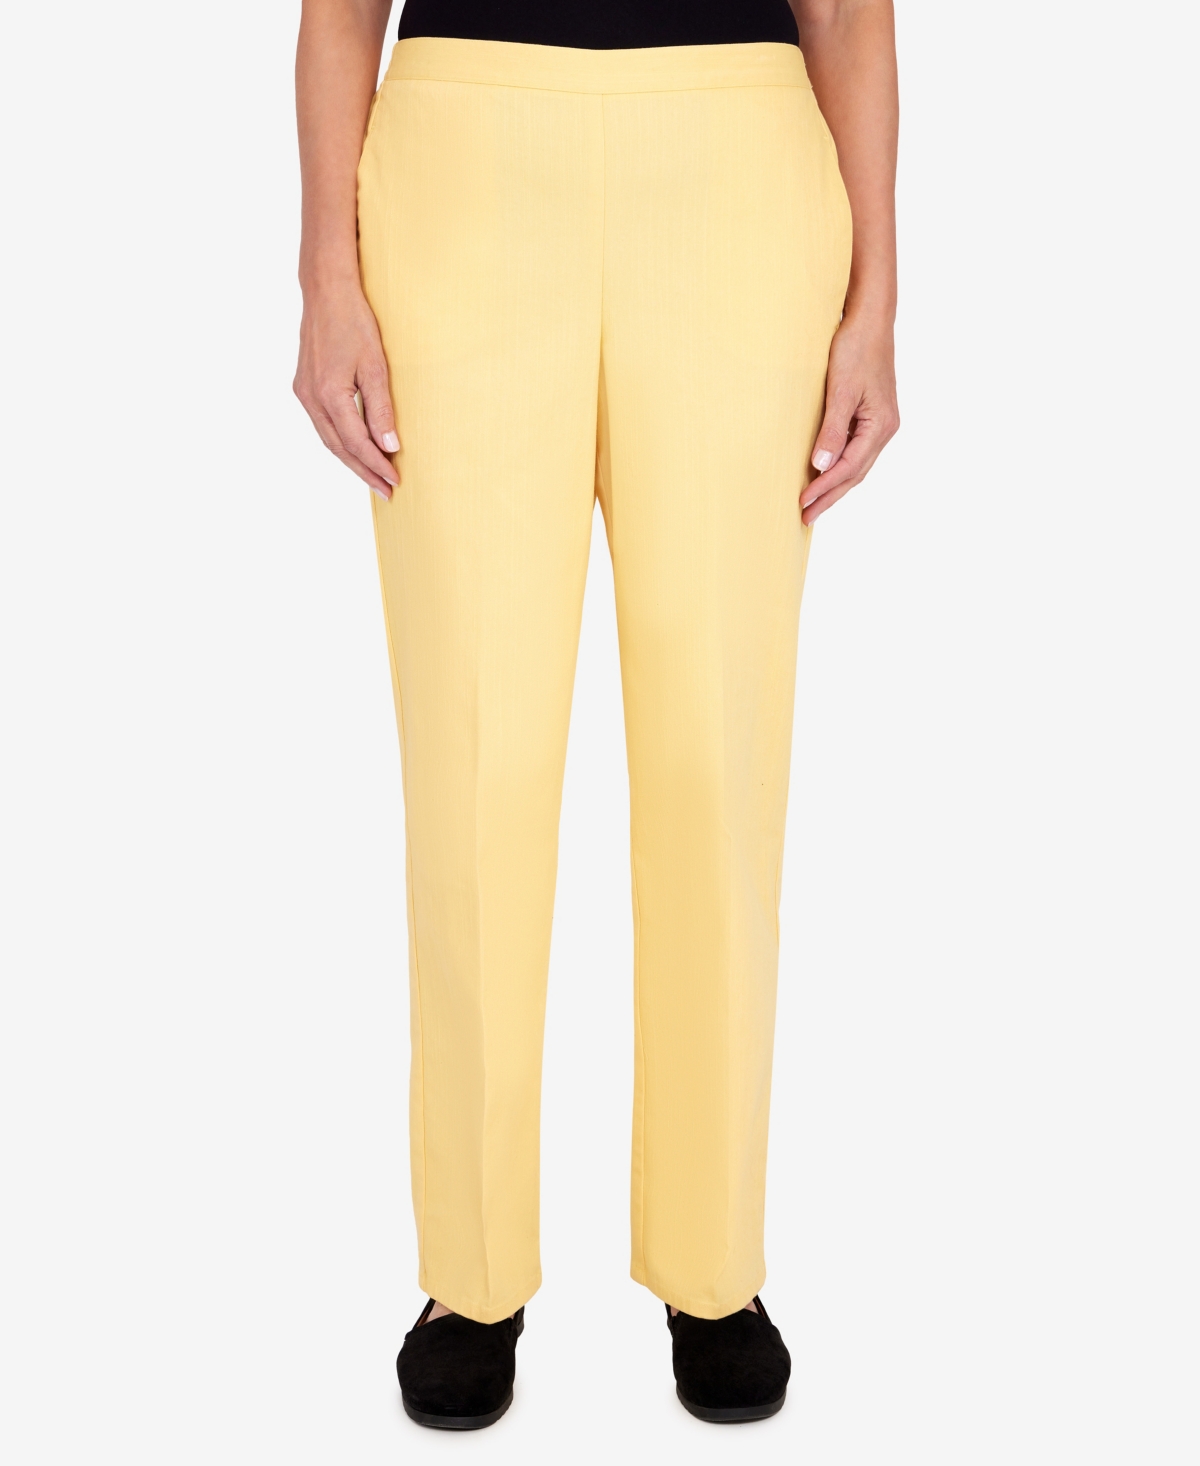  Alfred Dunner Women's Bright Idea Sunshine Short Length Pants